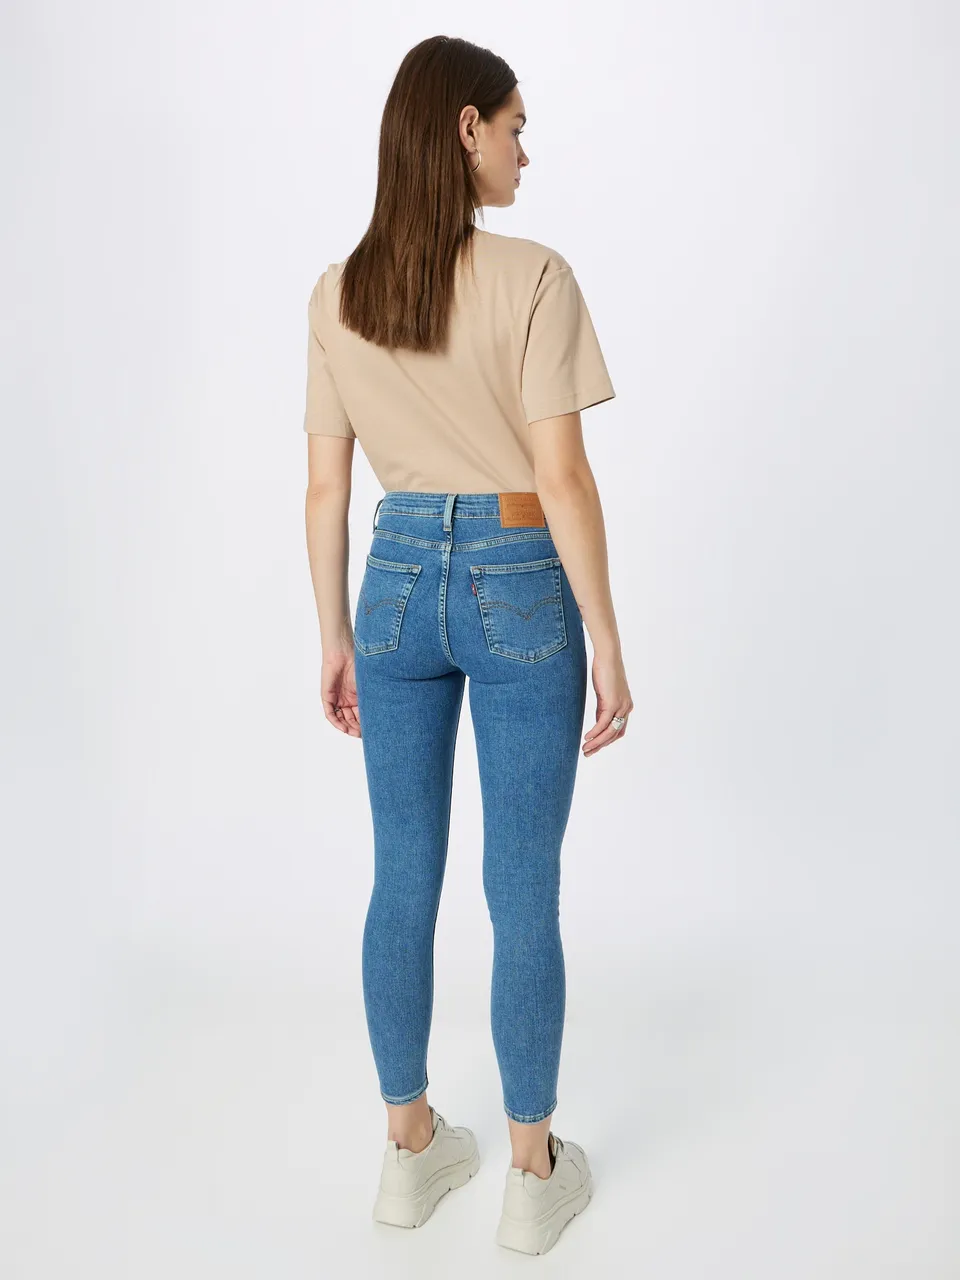 Jeans '721 High Rise Skinny'